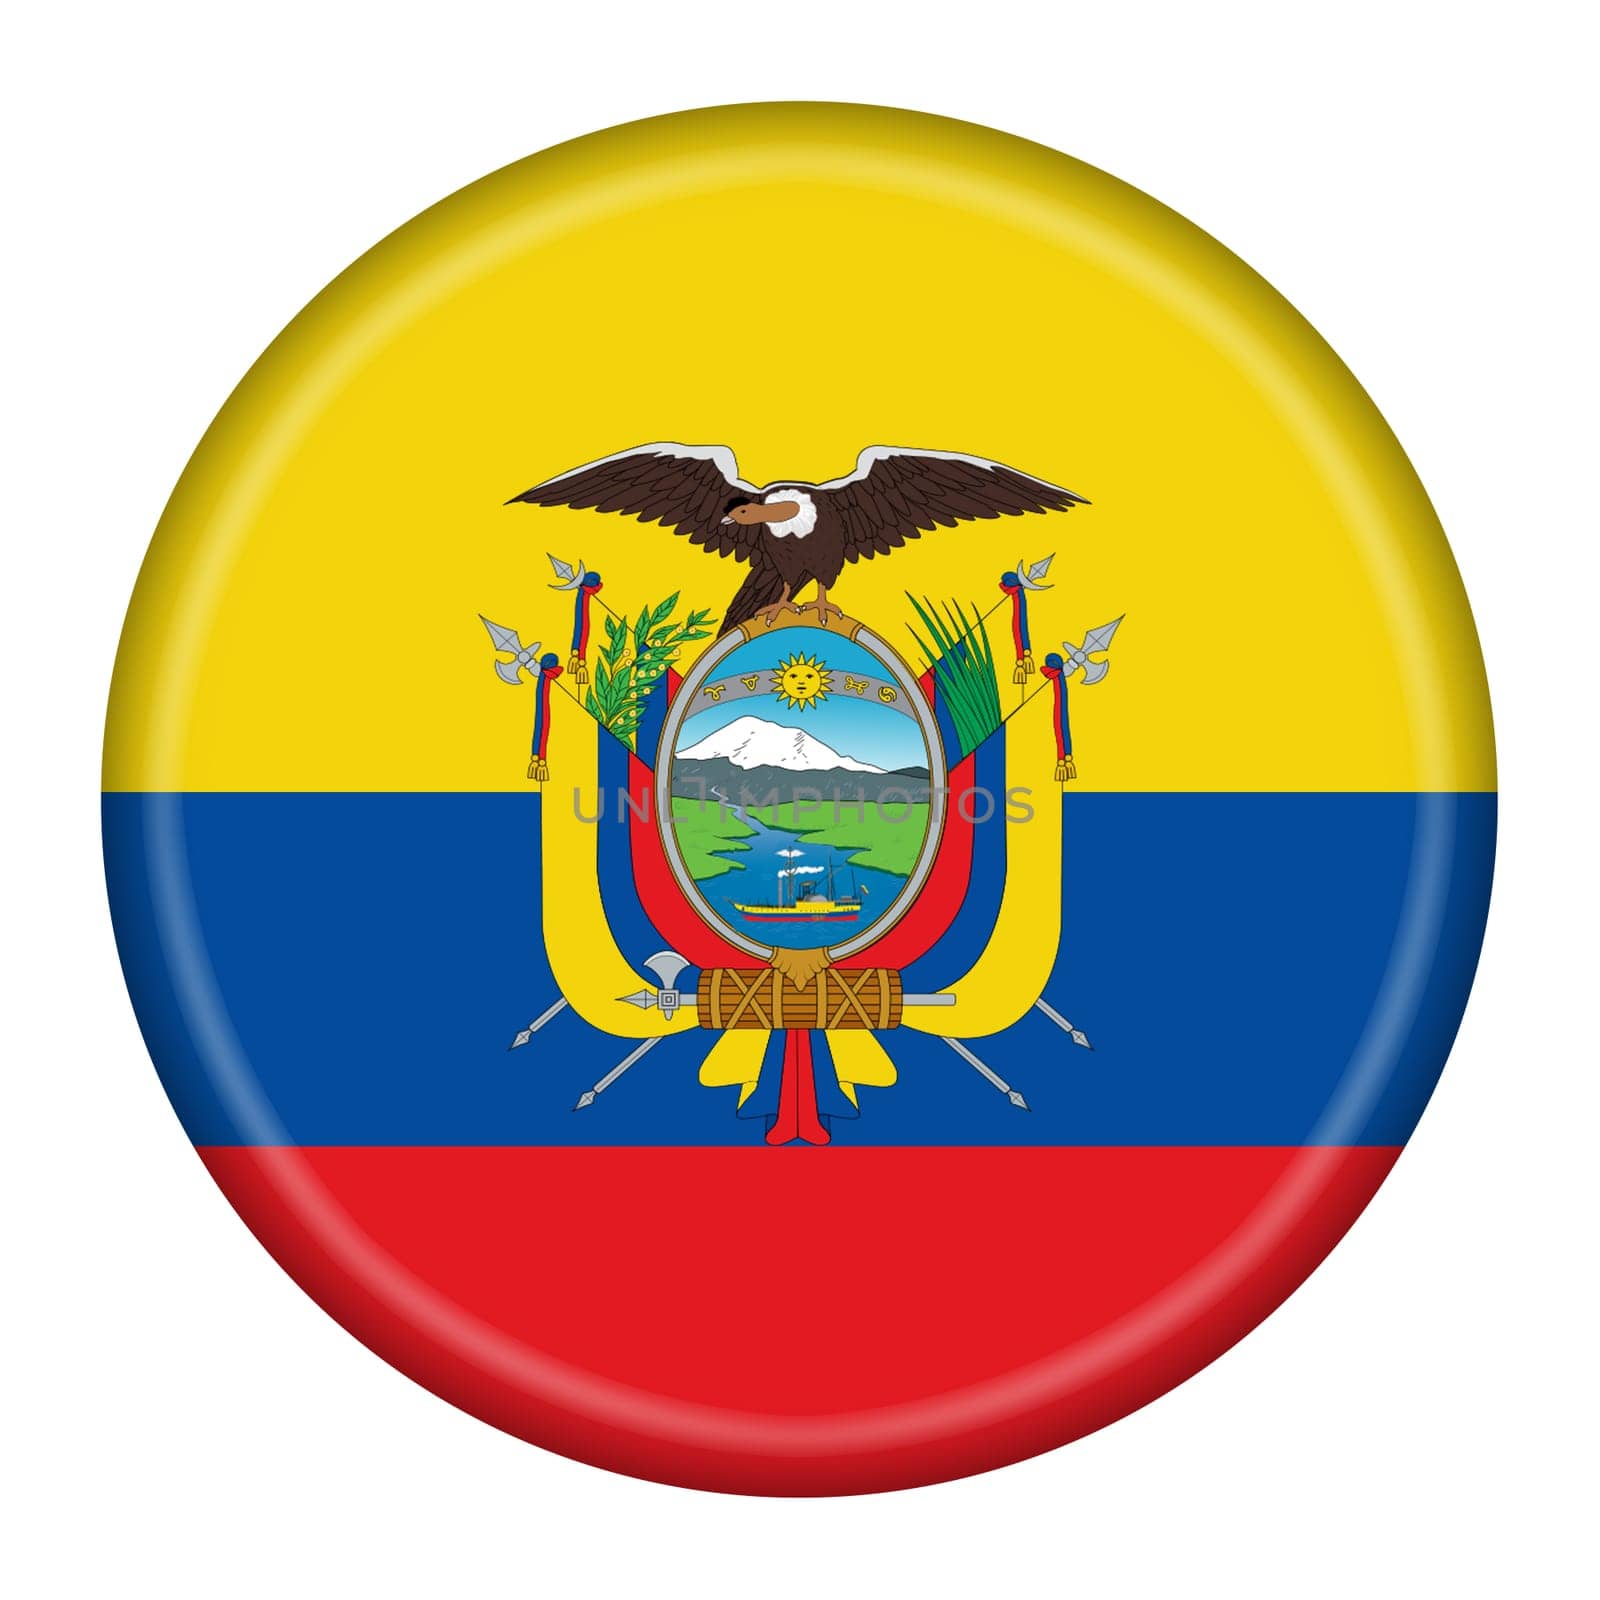 An Ecuador flag button 3d illustration with clipping path